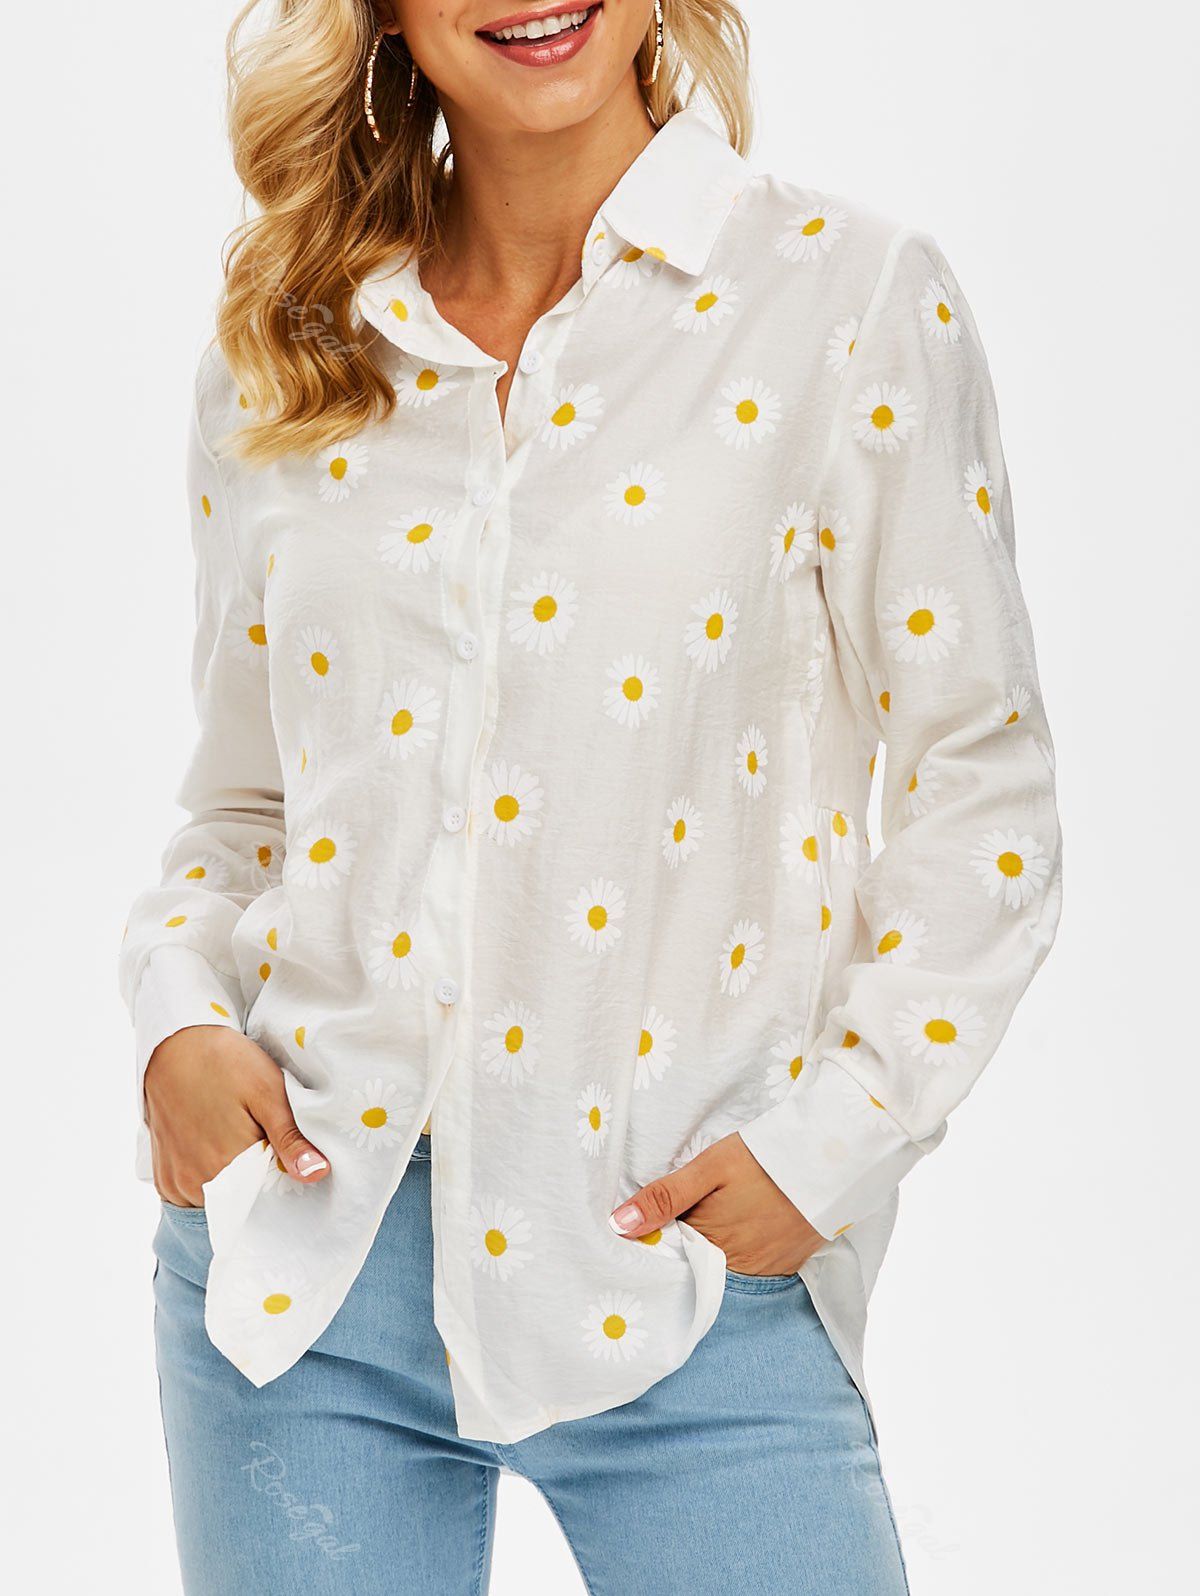 Chic Button Up Daisy Print Shirt  